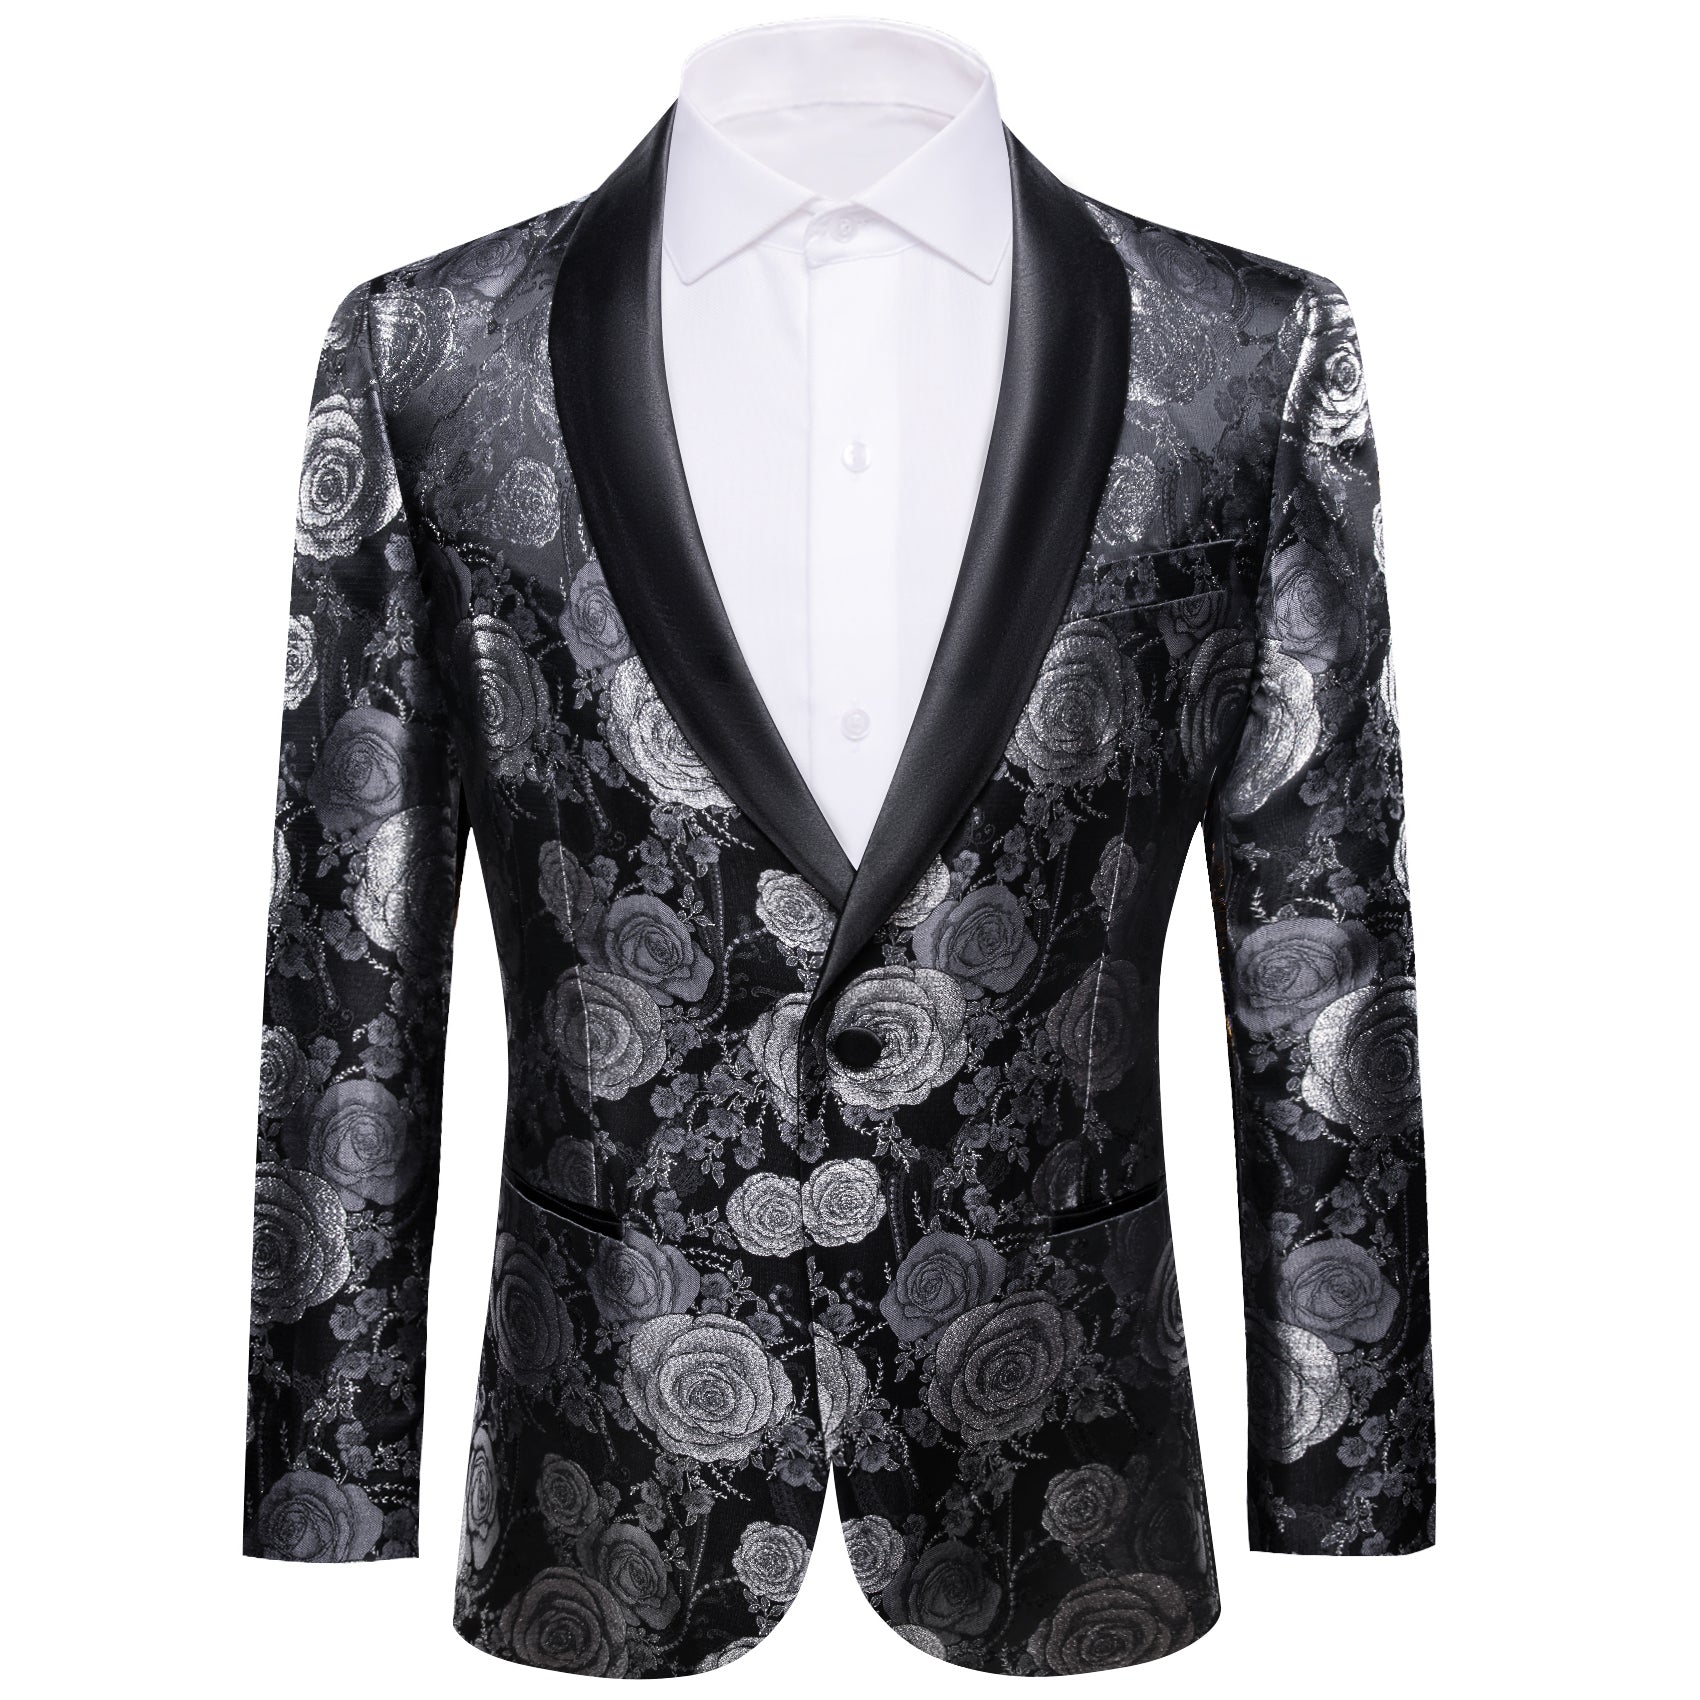 Men's Dress Party Black Grey Flower Suit Jacket Slim One Button Stylish Blazer